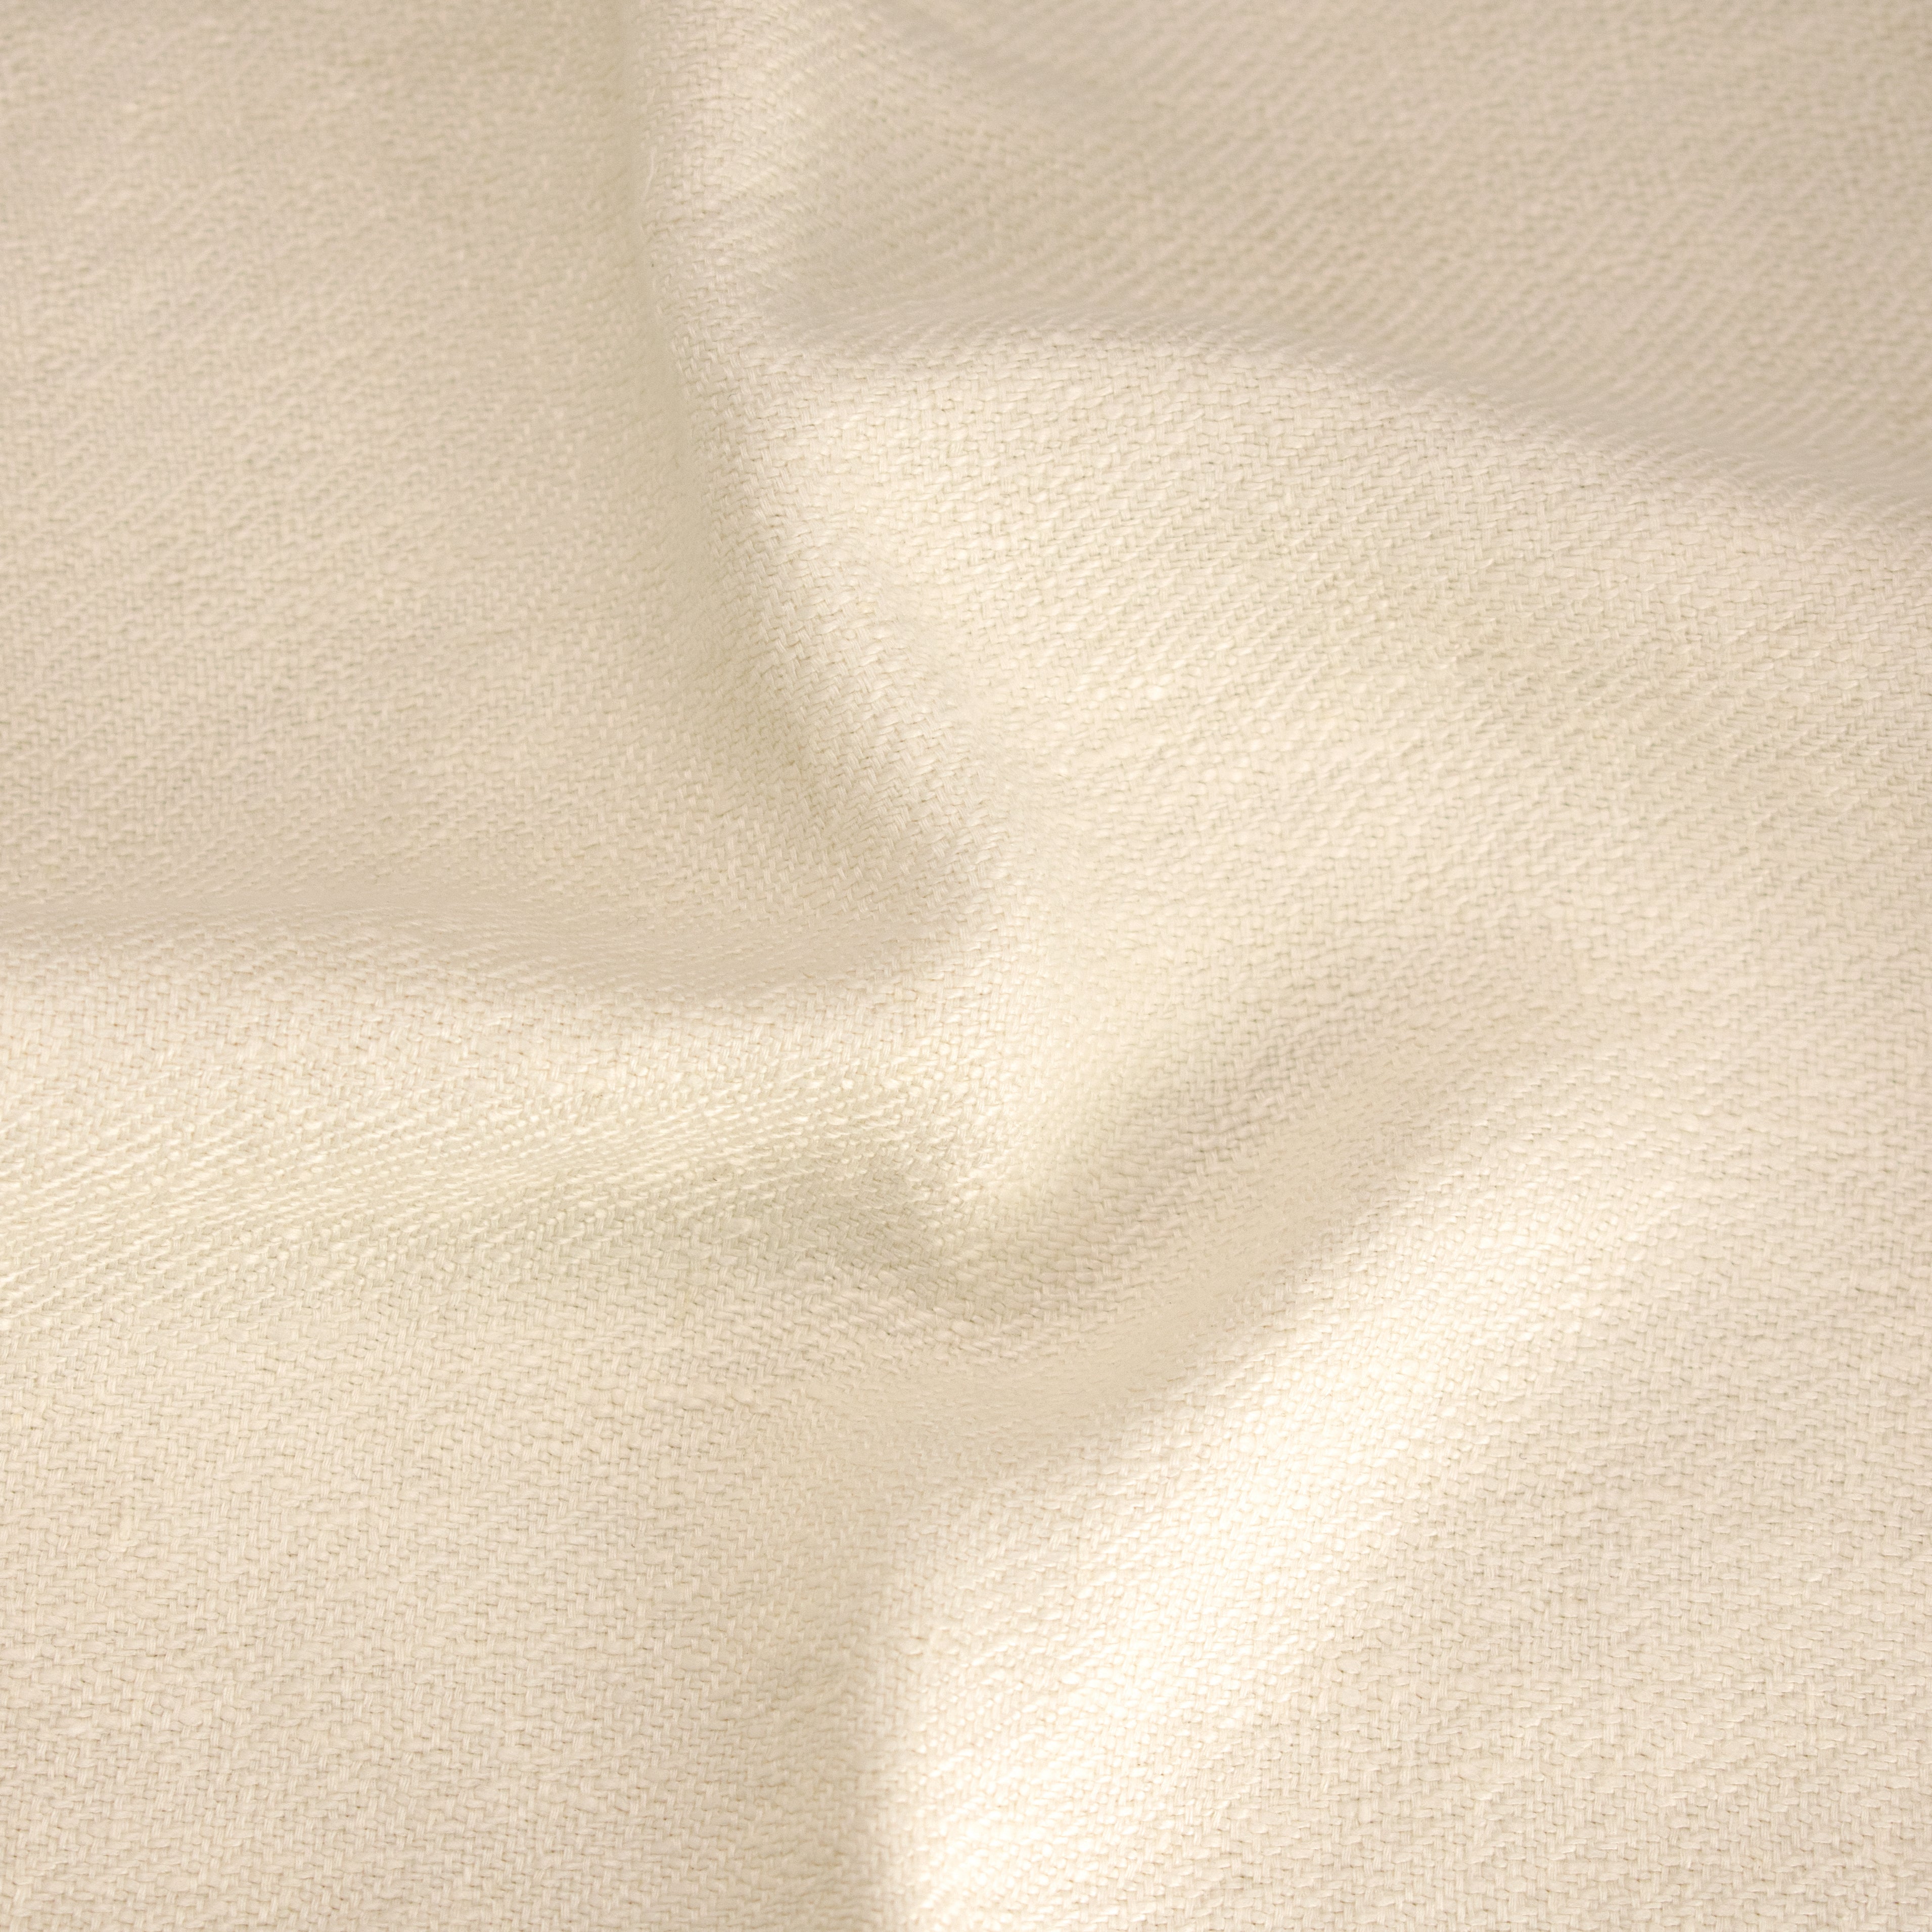 Forte Linen Towels